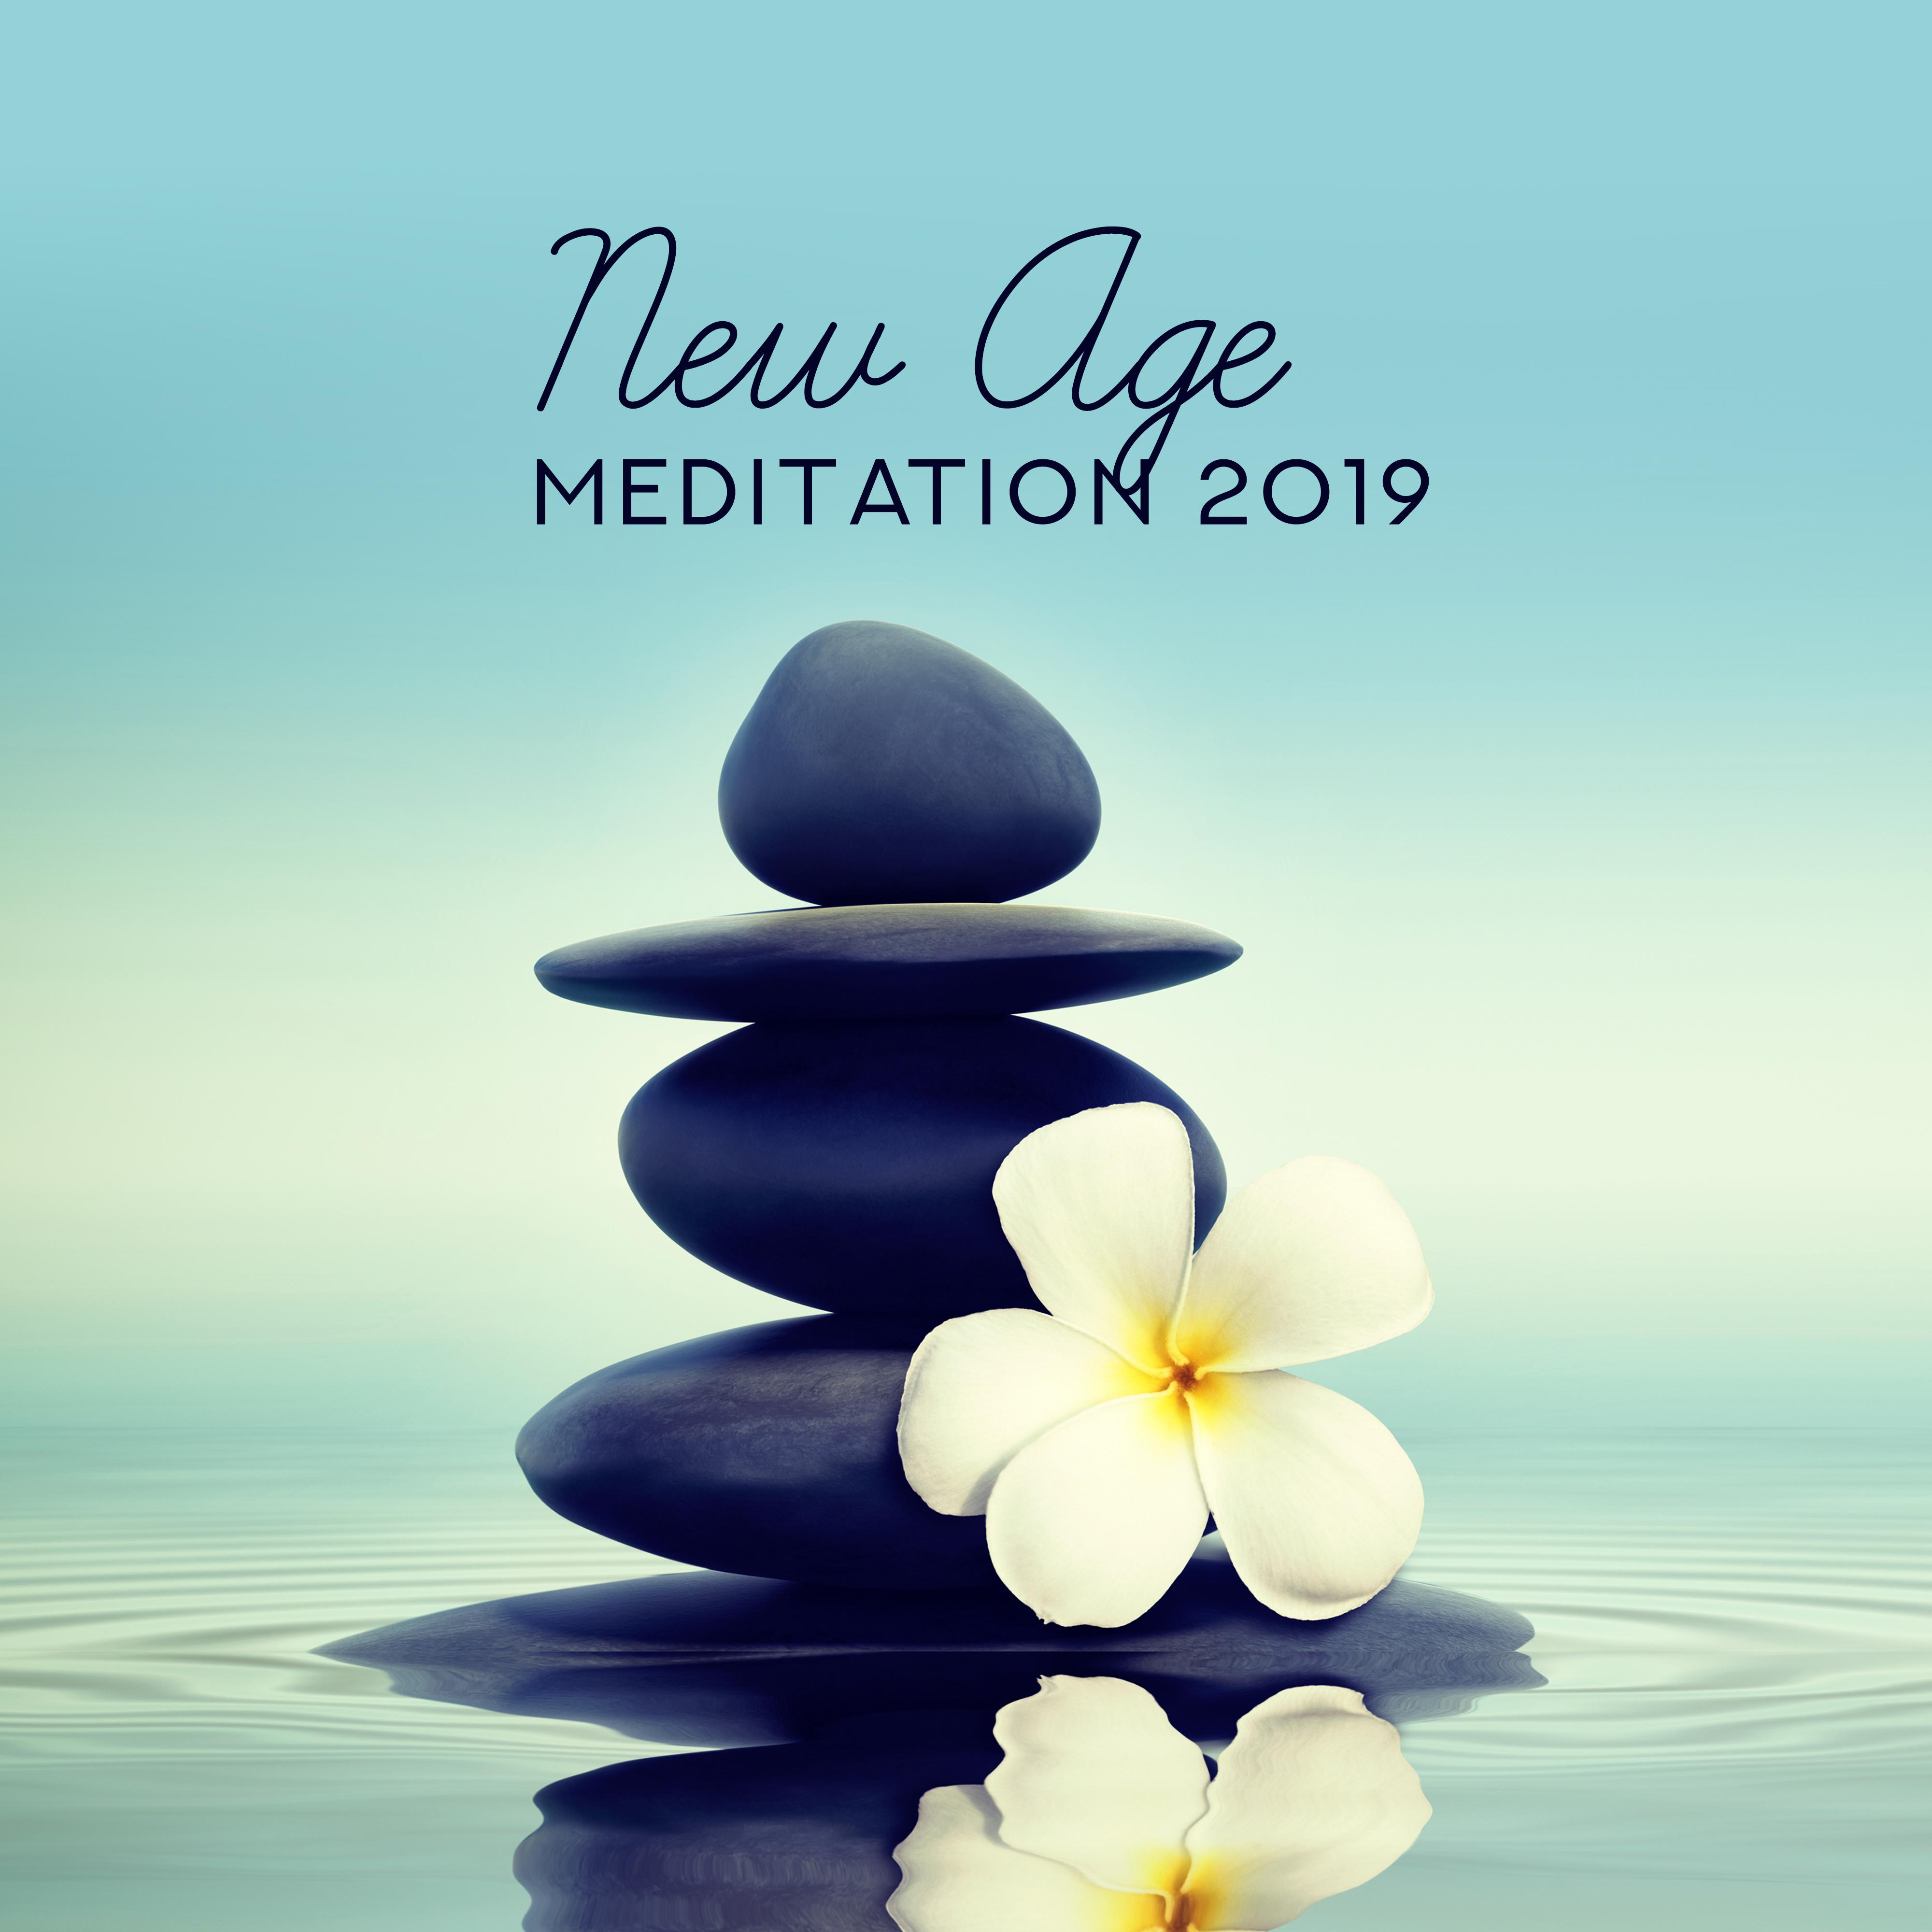 New Age Meditation 2019